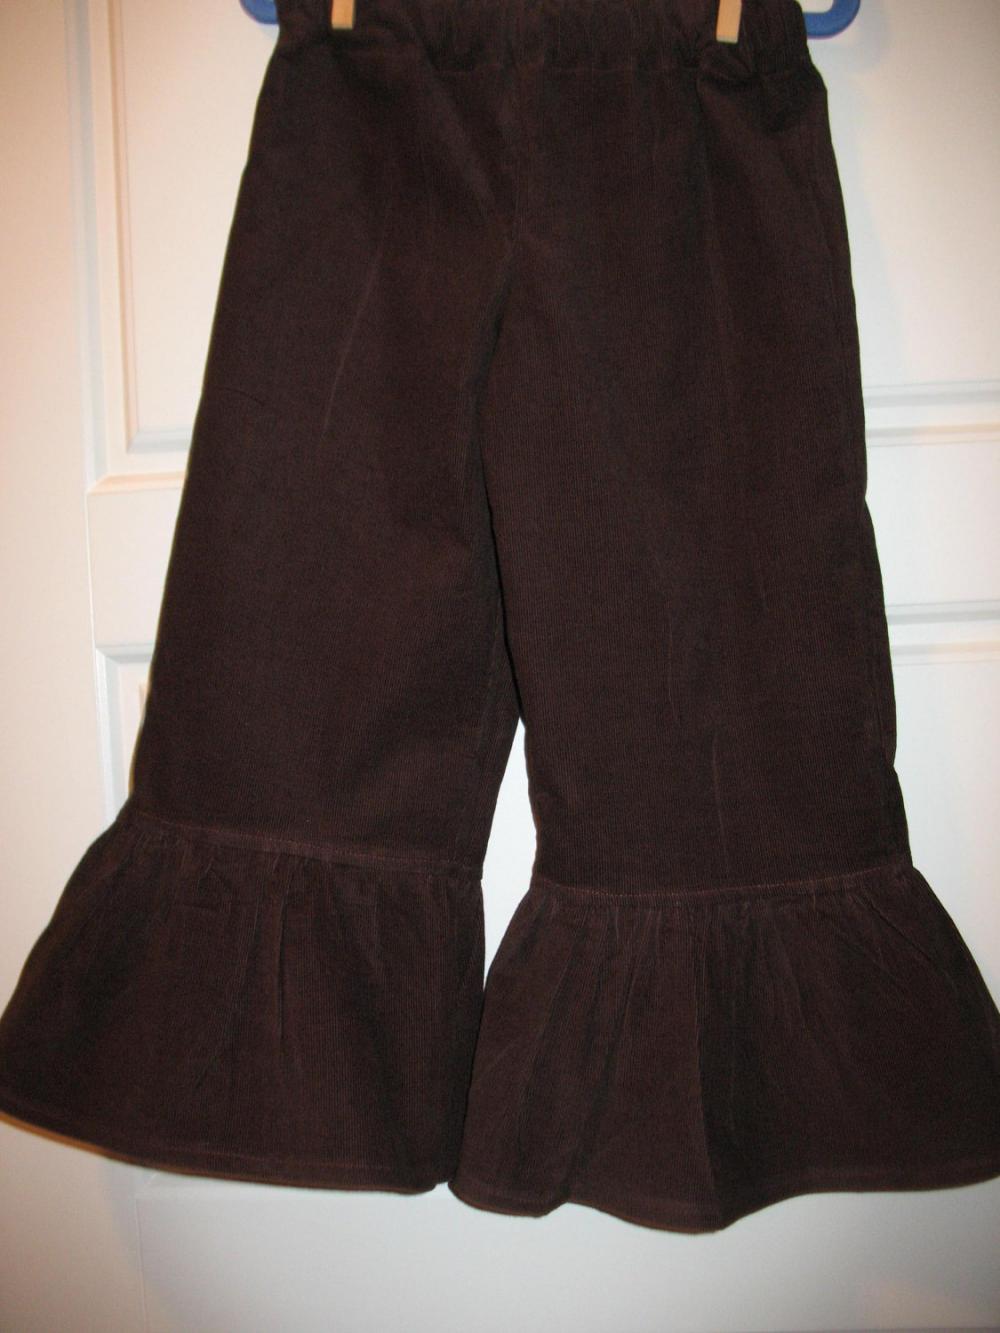 Girls Ruffle Pants Corduroy Any Size Brown Corduroy Ruffle Pants Girls Toddlers